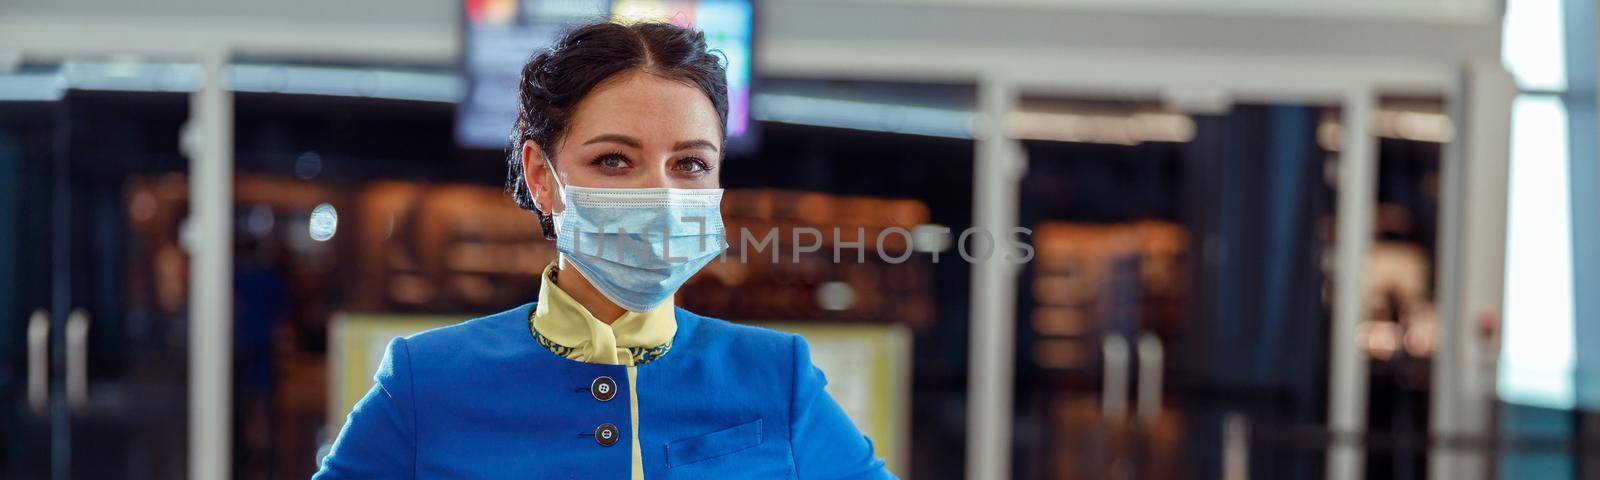 Woman stewardess in medical mask standing in airport terminal by Yaroslav_astakhov